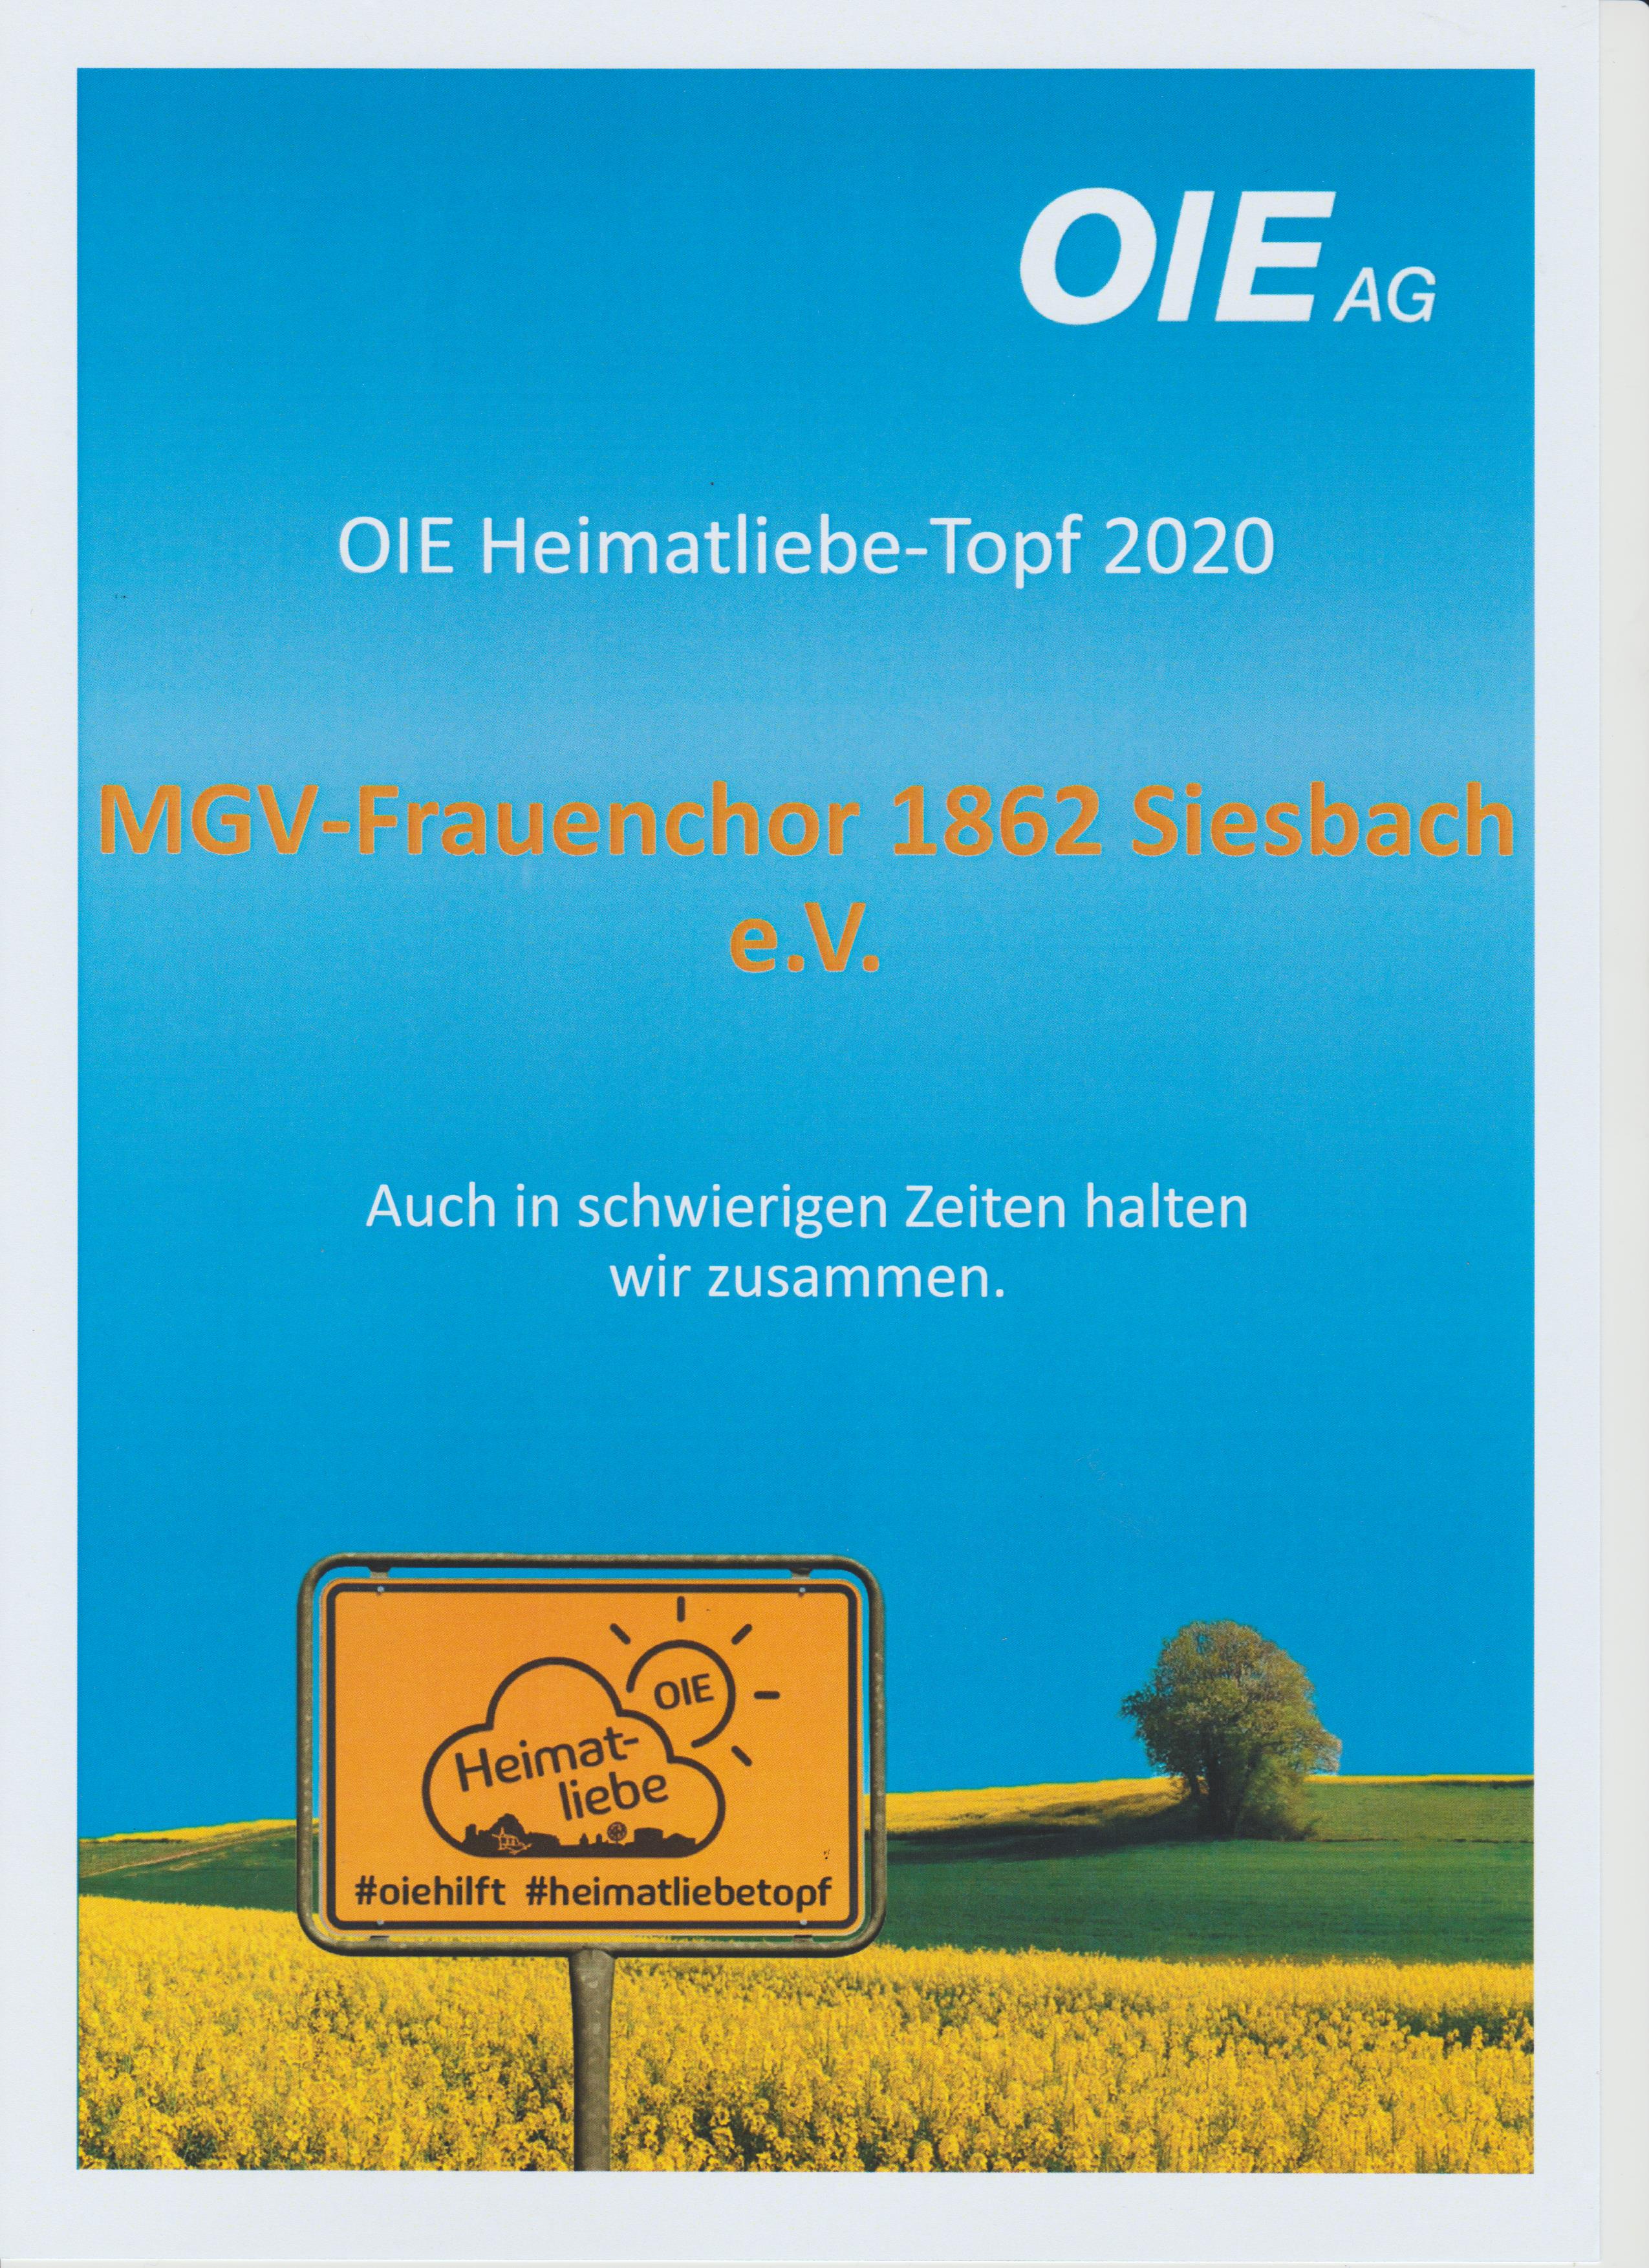 Sponsoring OIE MGV/Frauenchor Siesbach